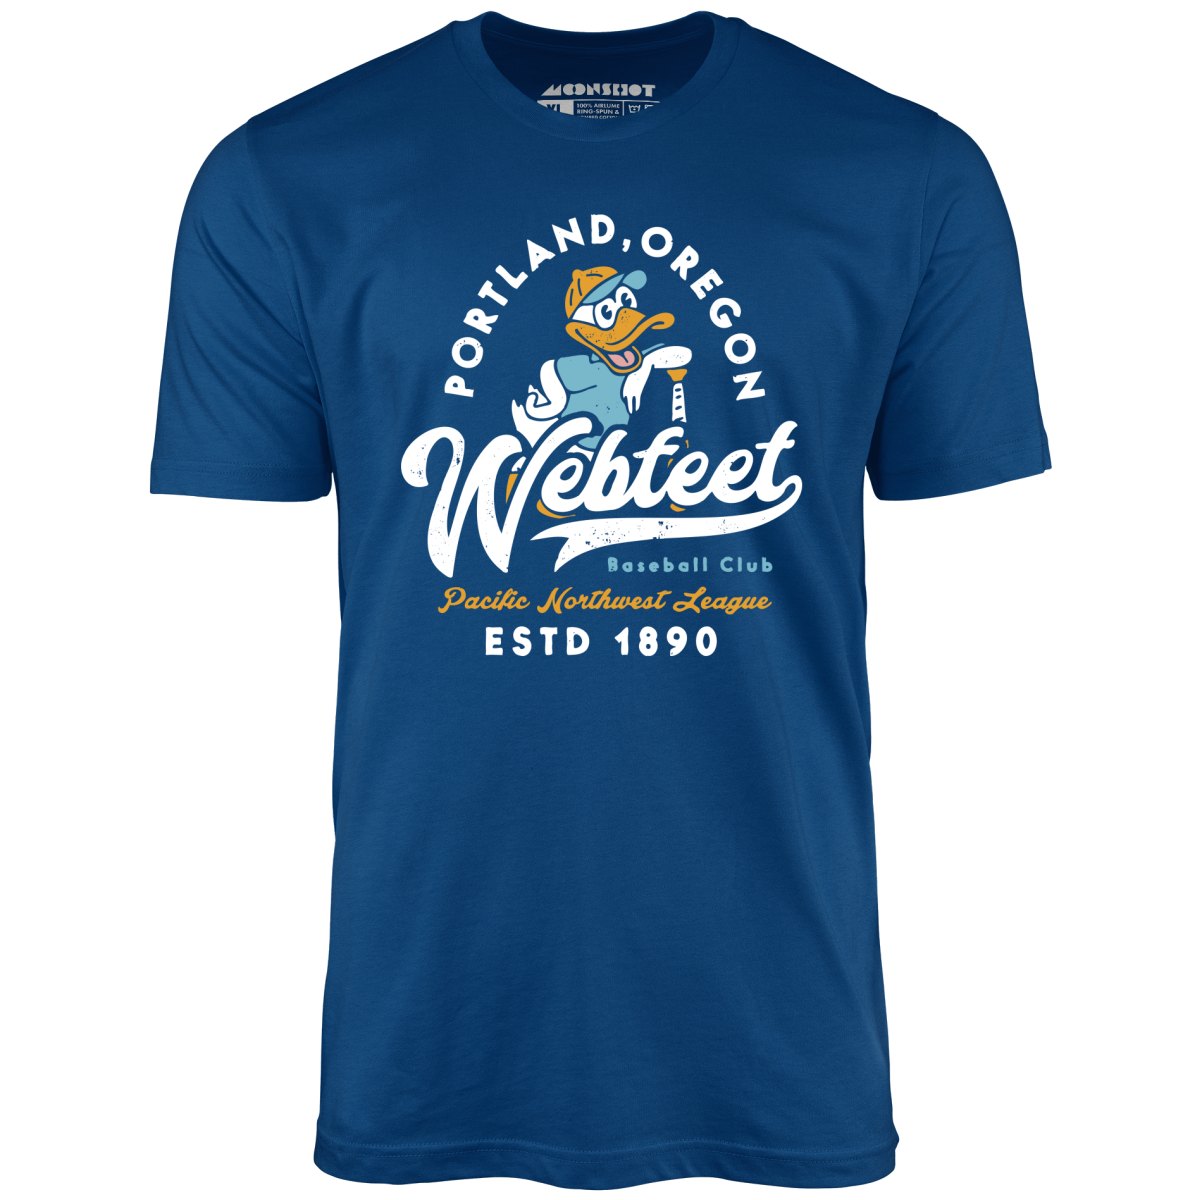 Portland Webfeet - Oregon - Vintage Defunct Baseball Teams - Unisex T-Shirt